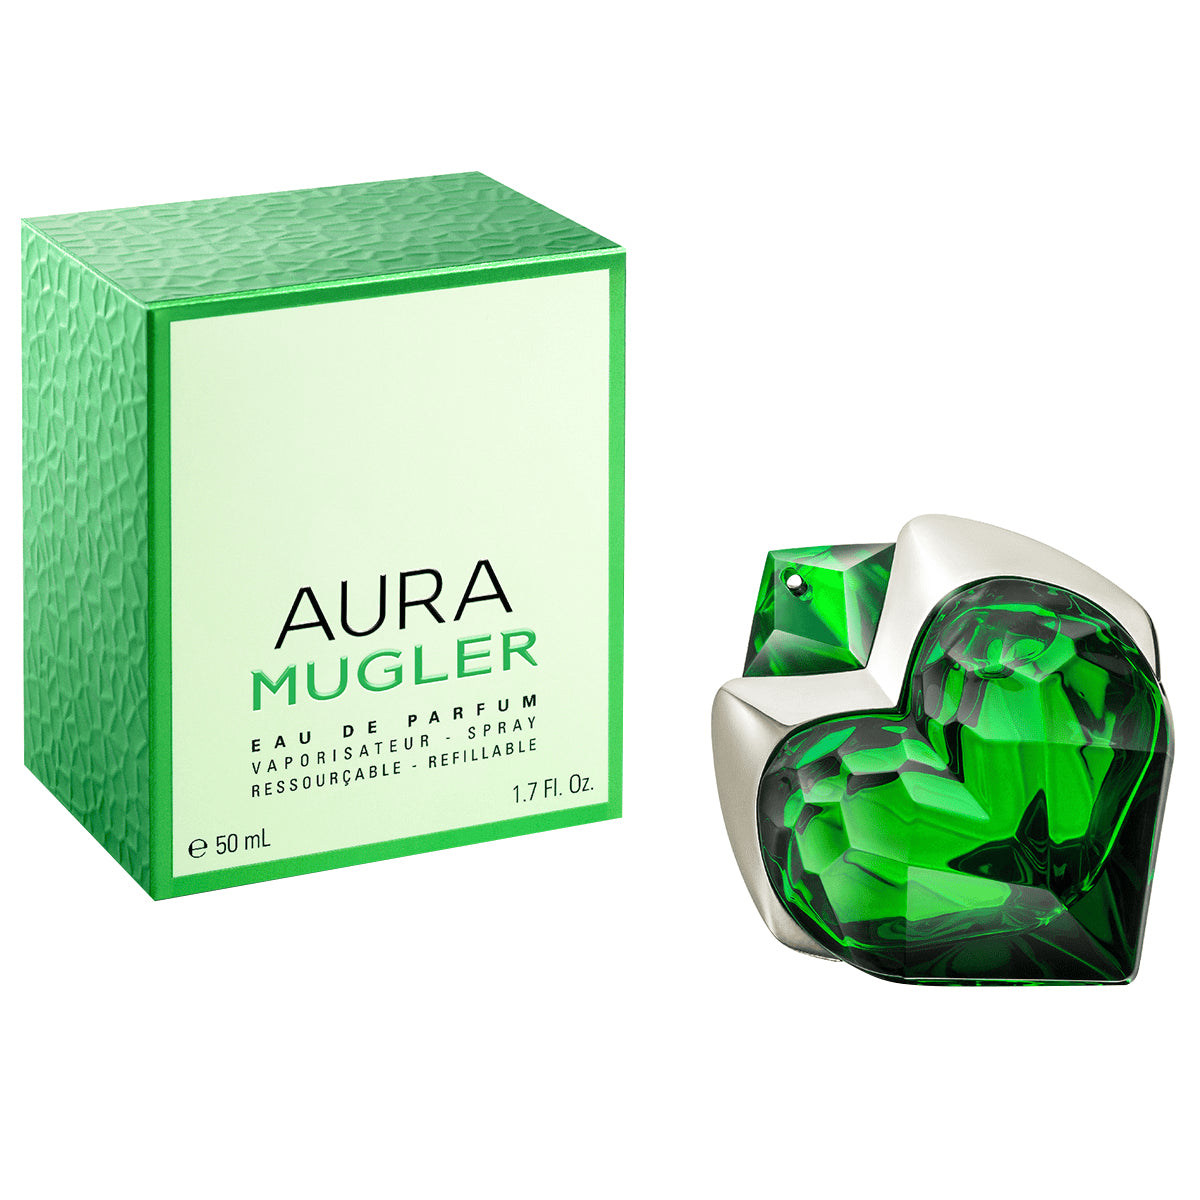 Parfums Aura Mugler de la marque Thierry Mugler pour femme 50 ml